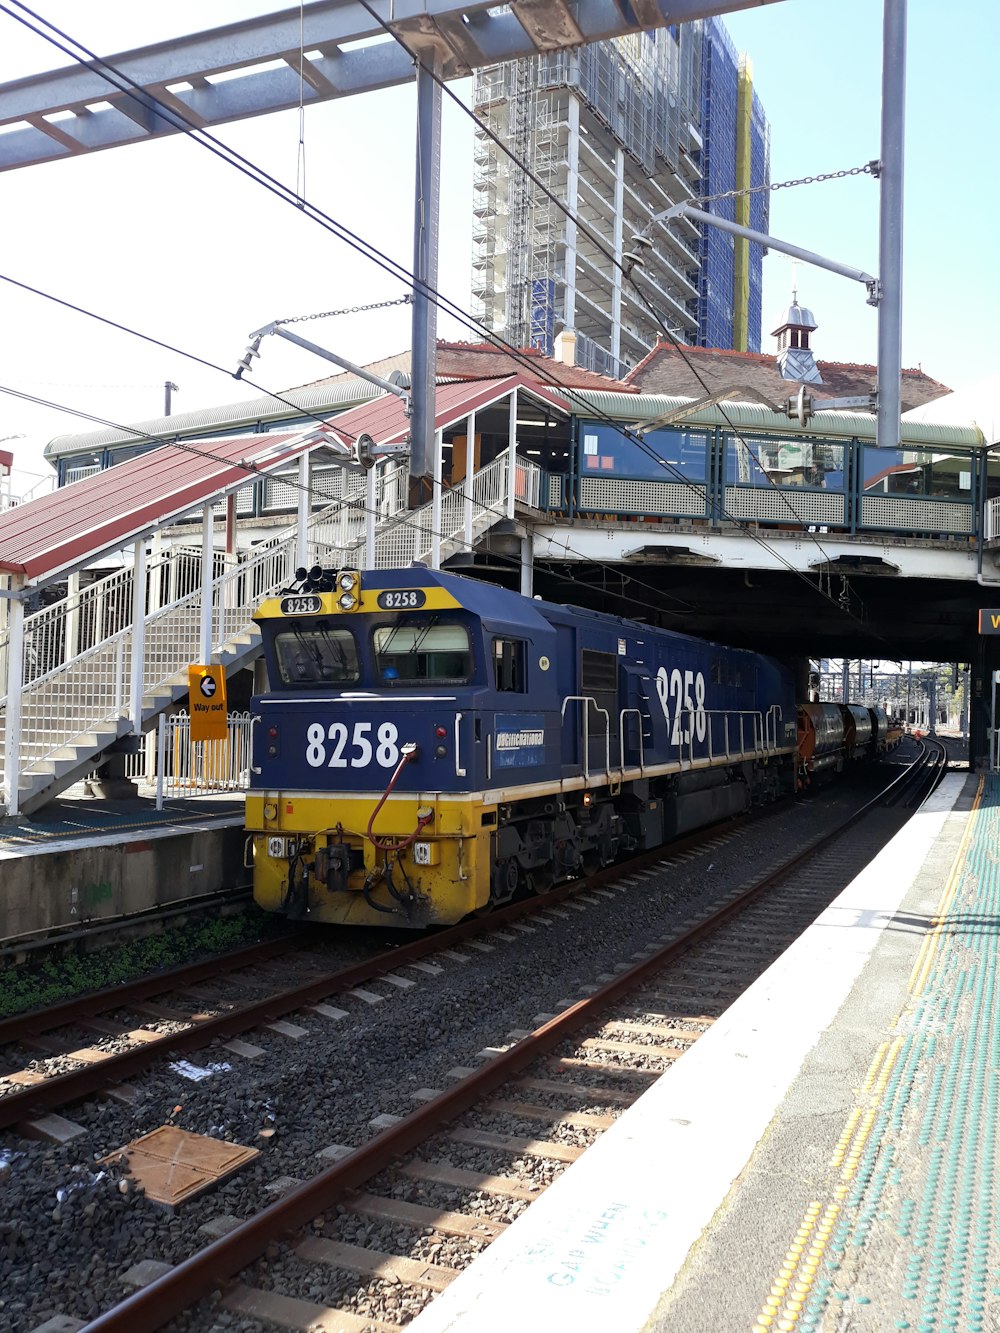 blue and yellow train on rail tracks